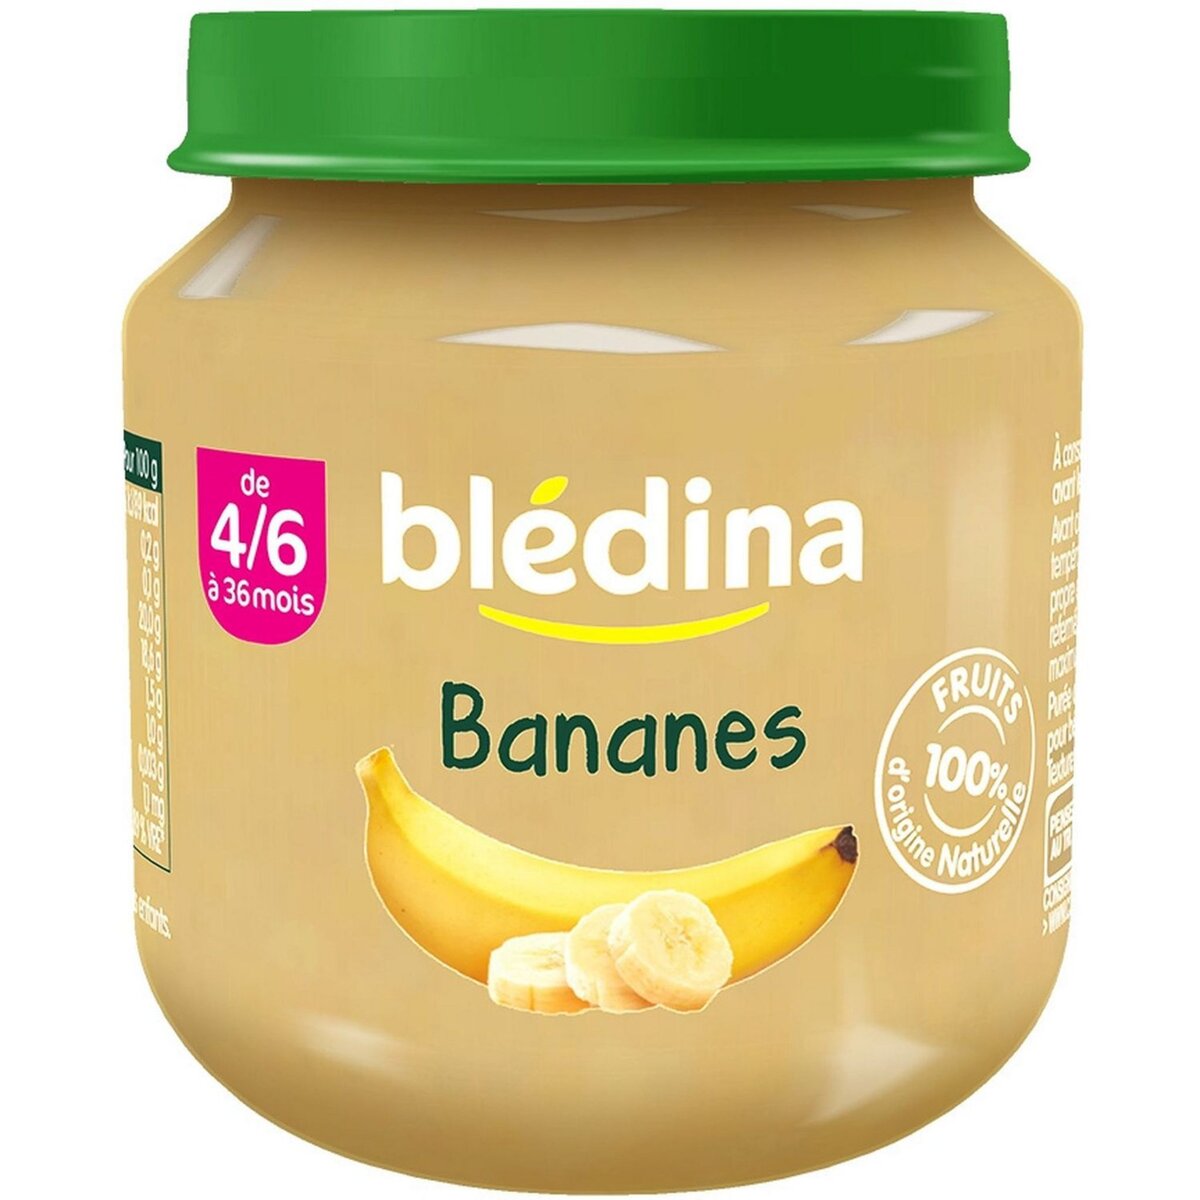 BLEDINA Petits Pots Bébé - Dès 4/6 mois - Pommes Bananes 4 pots de